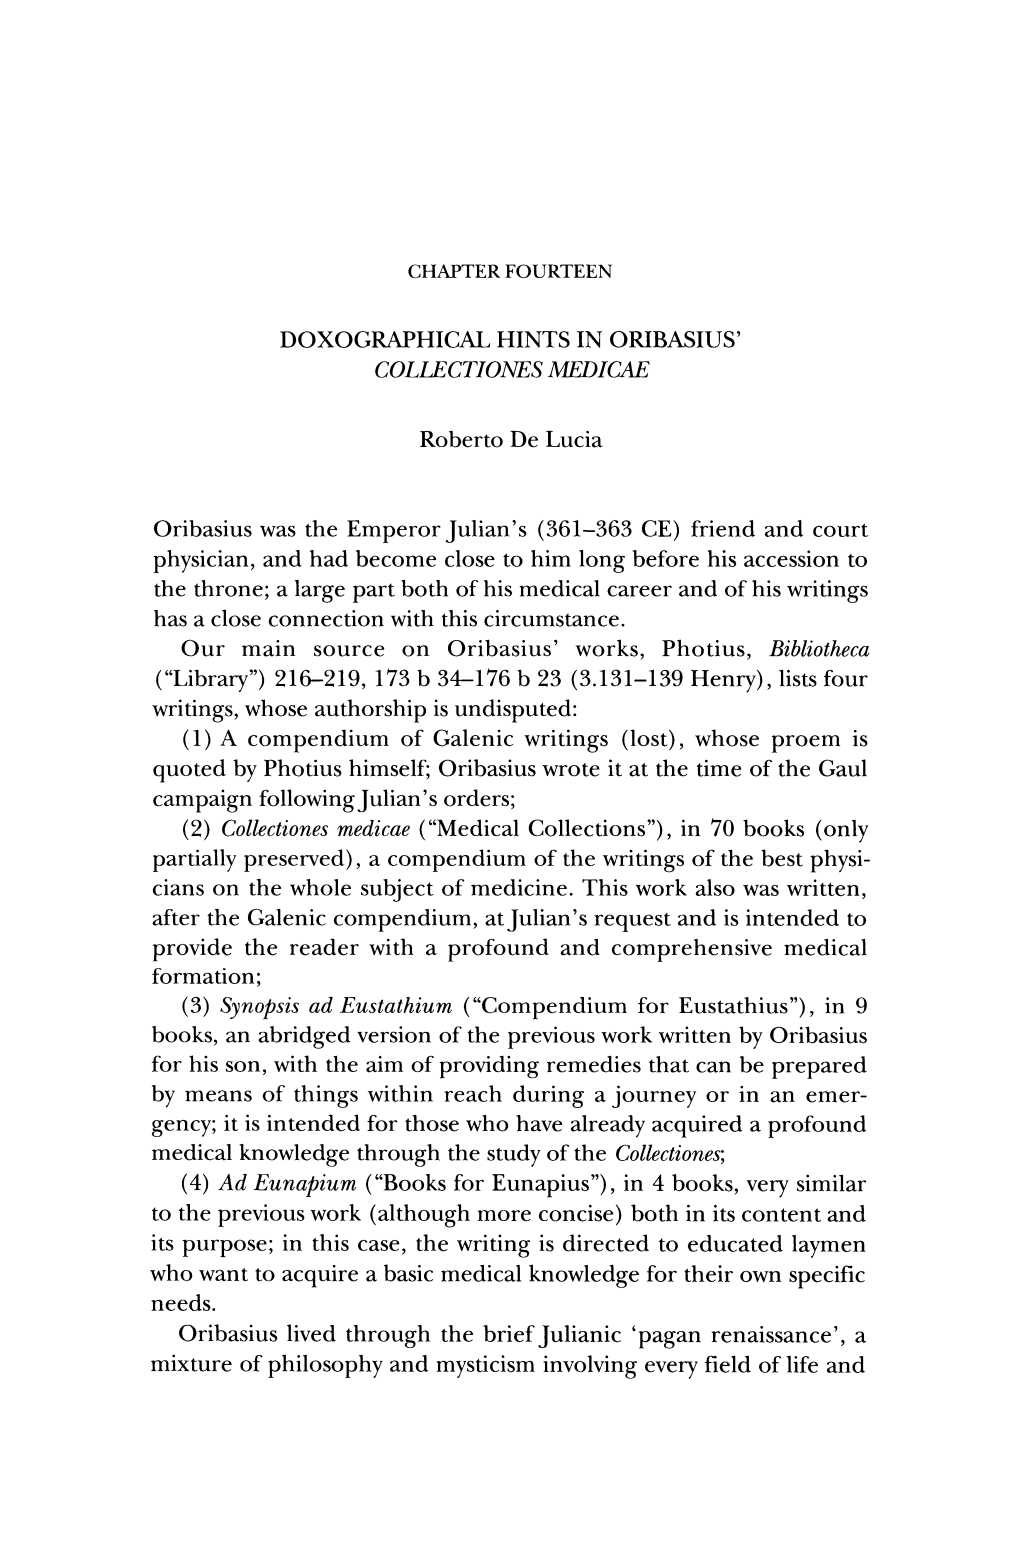 Doxographical Hints in Oribasius' Coliectiones Medicae